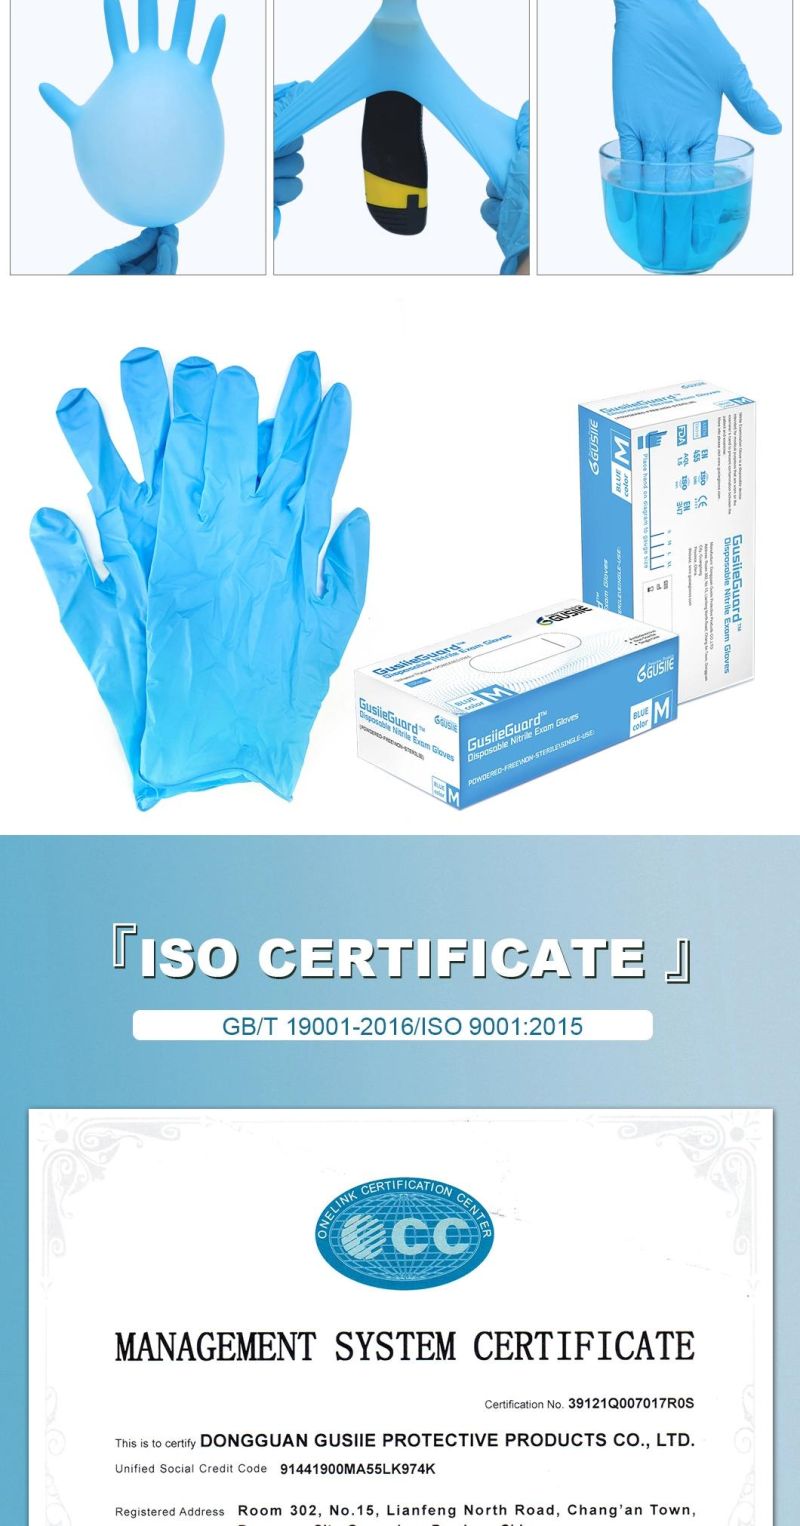 Disposable Safety Exam Nitrile Gloves Without Powder Nitrile Medical Examination Large Gloves